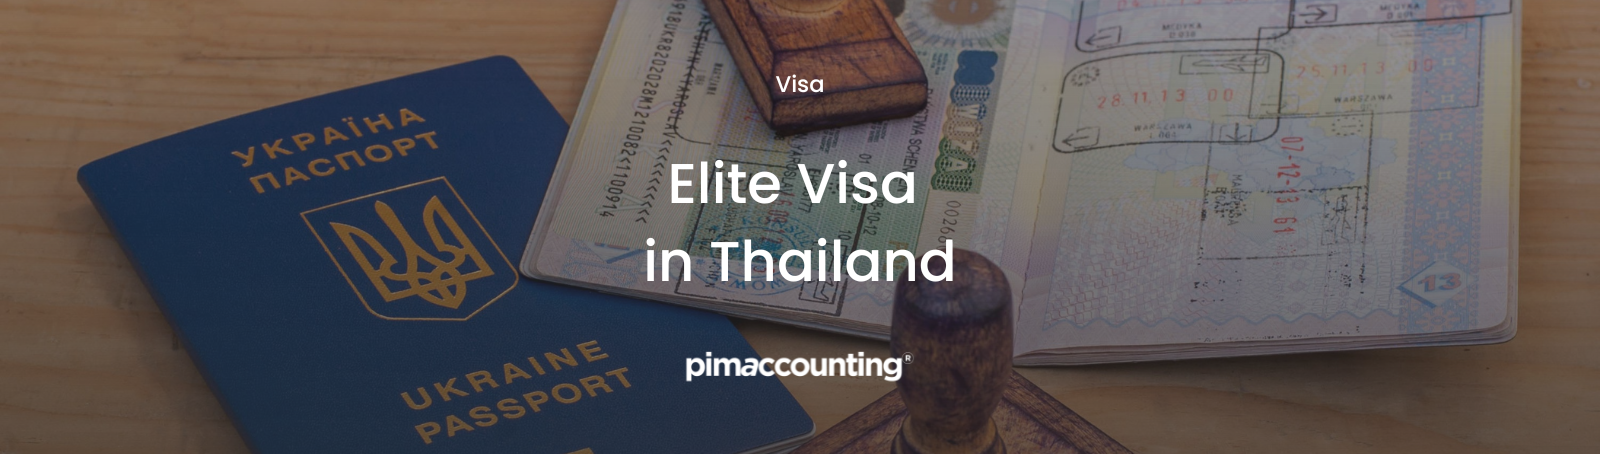 Elite Visa in Thailand